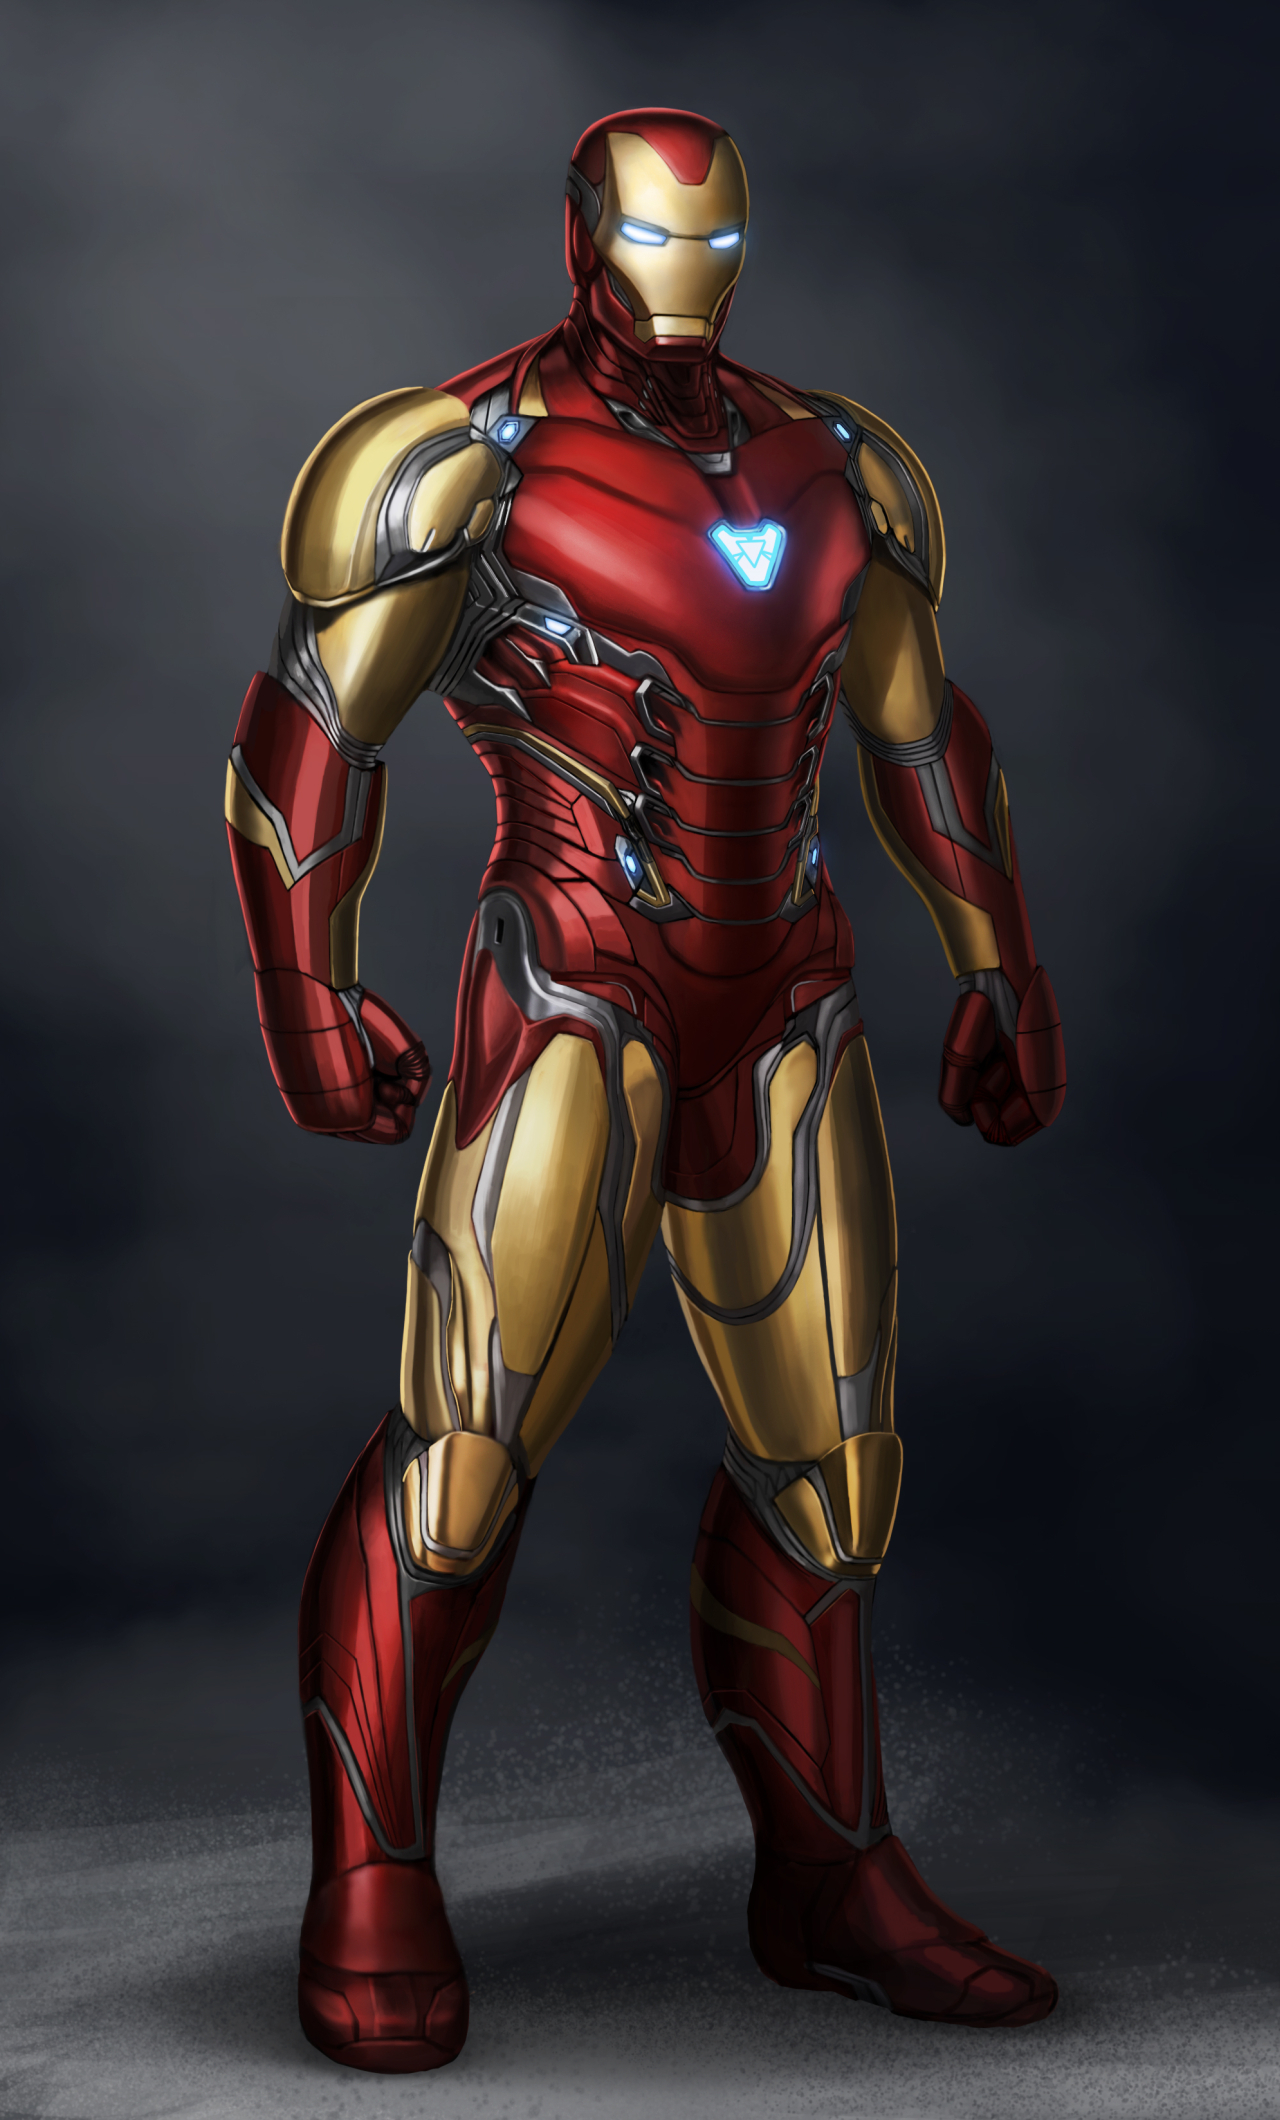 1280x2120 Ironman Avengers Endgame Suit Mark 85 Iphone 6 Plus Wallpaper